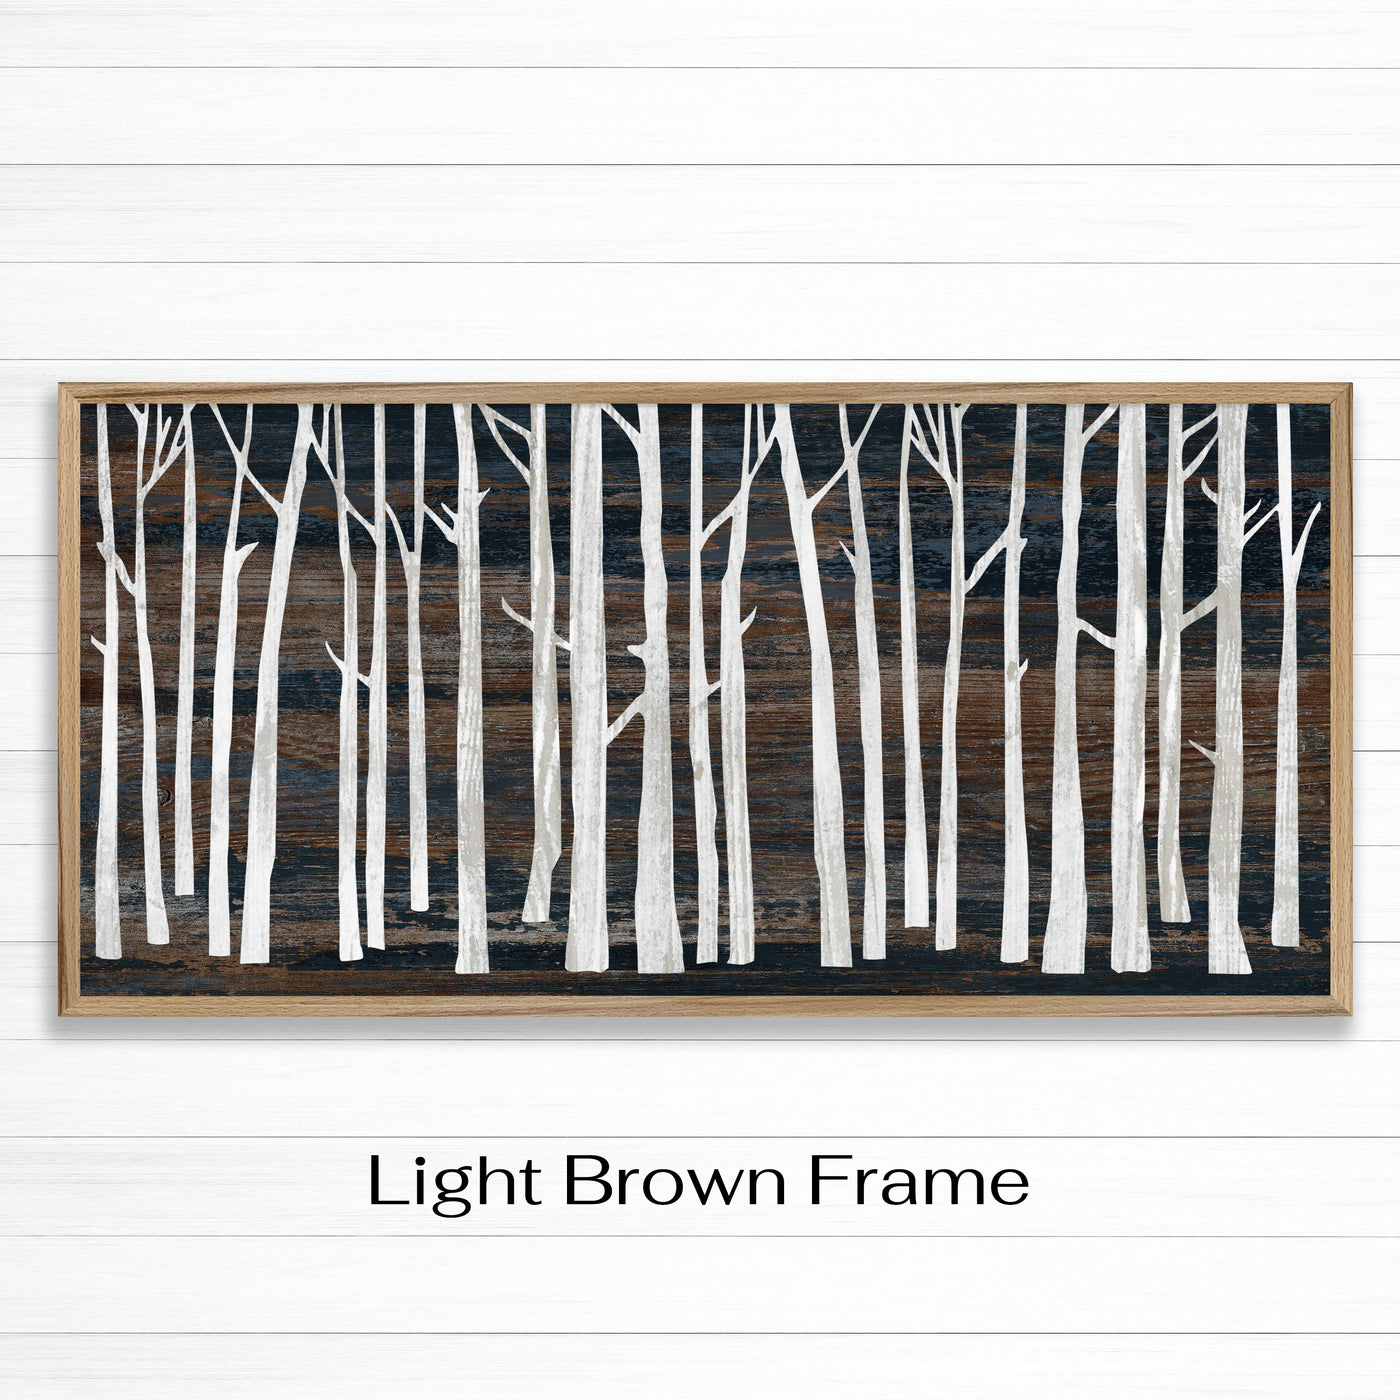 Custom framed canvas birch tree wall art. Cabin and nature wall decor made in Lincoln, Nebraska, USA